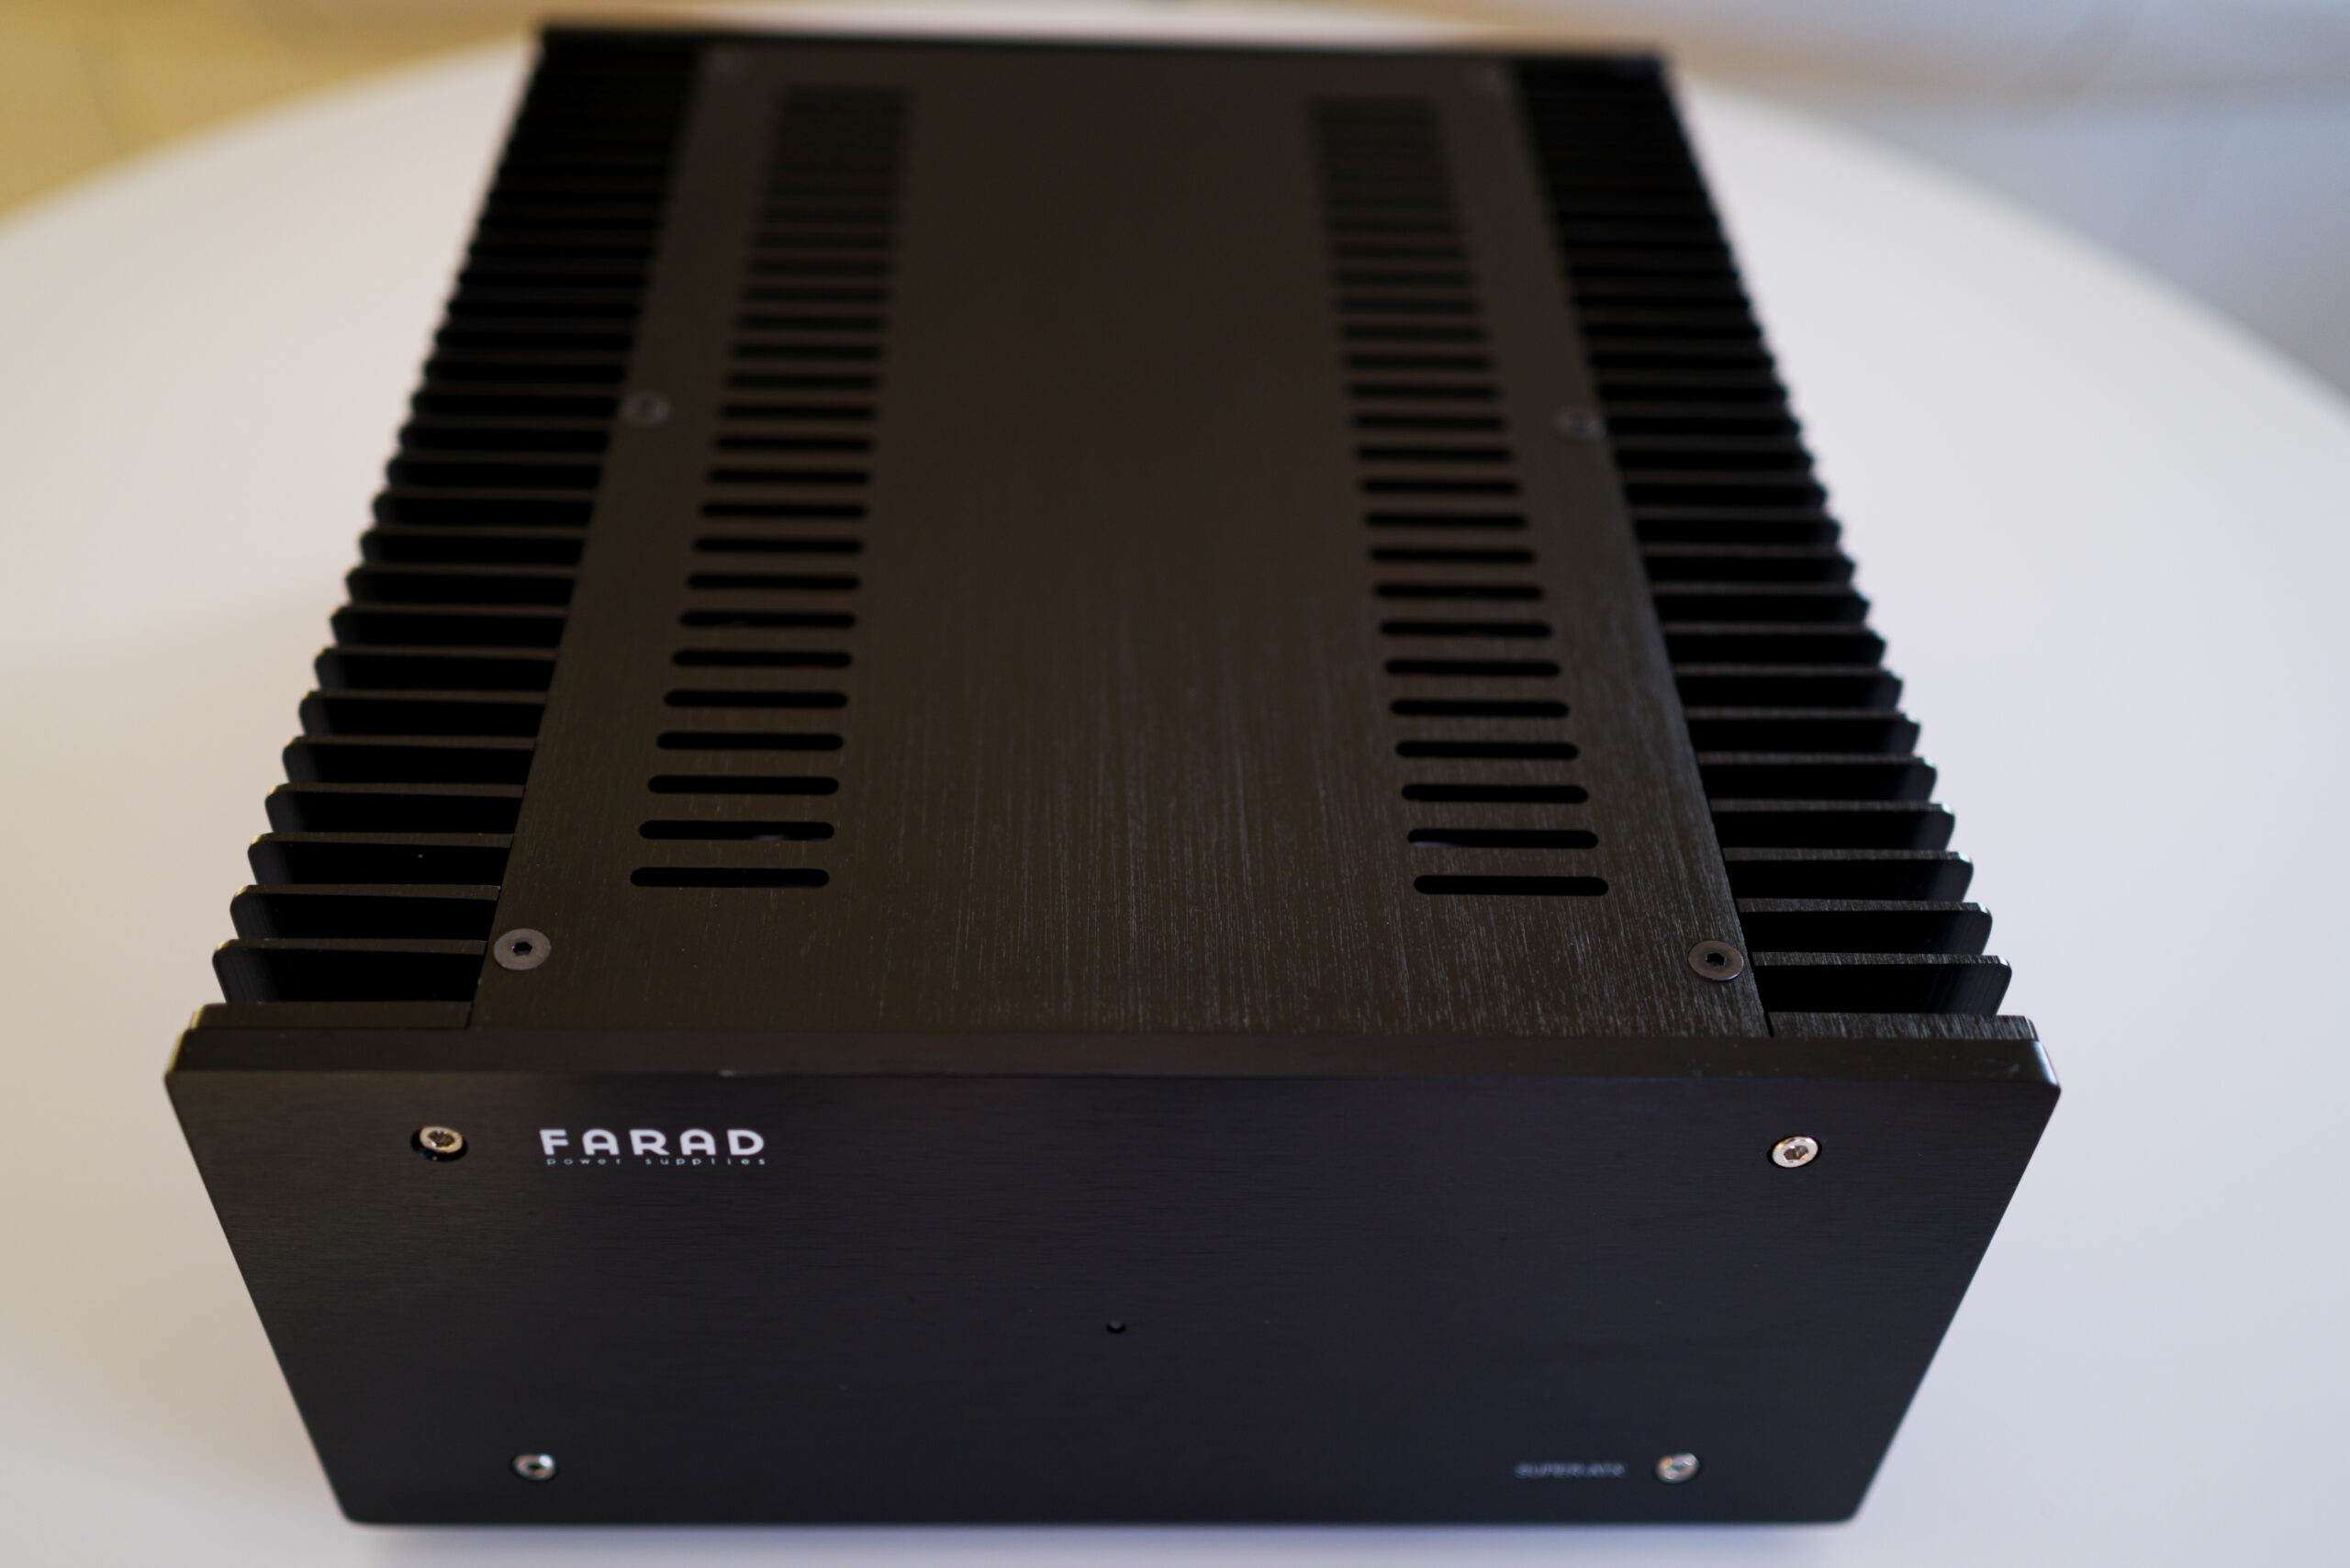 Erfahrungsbericht fis Audio PC mit FARAD SuperATX (Prototyp)